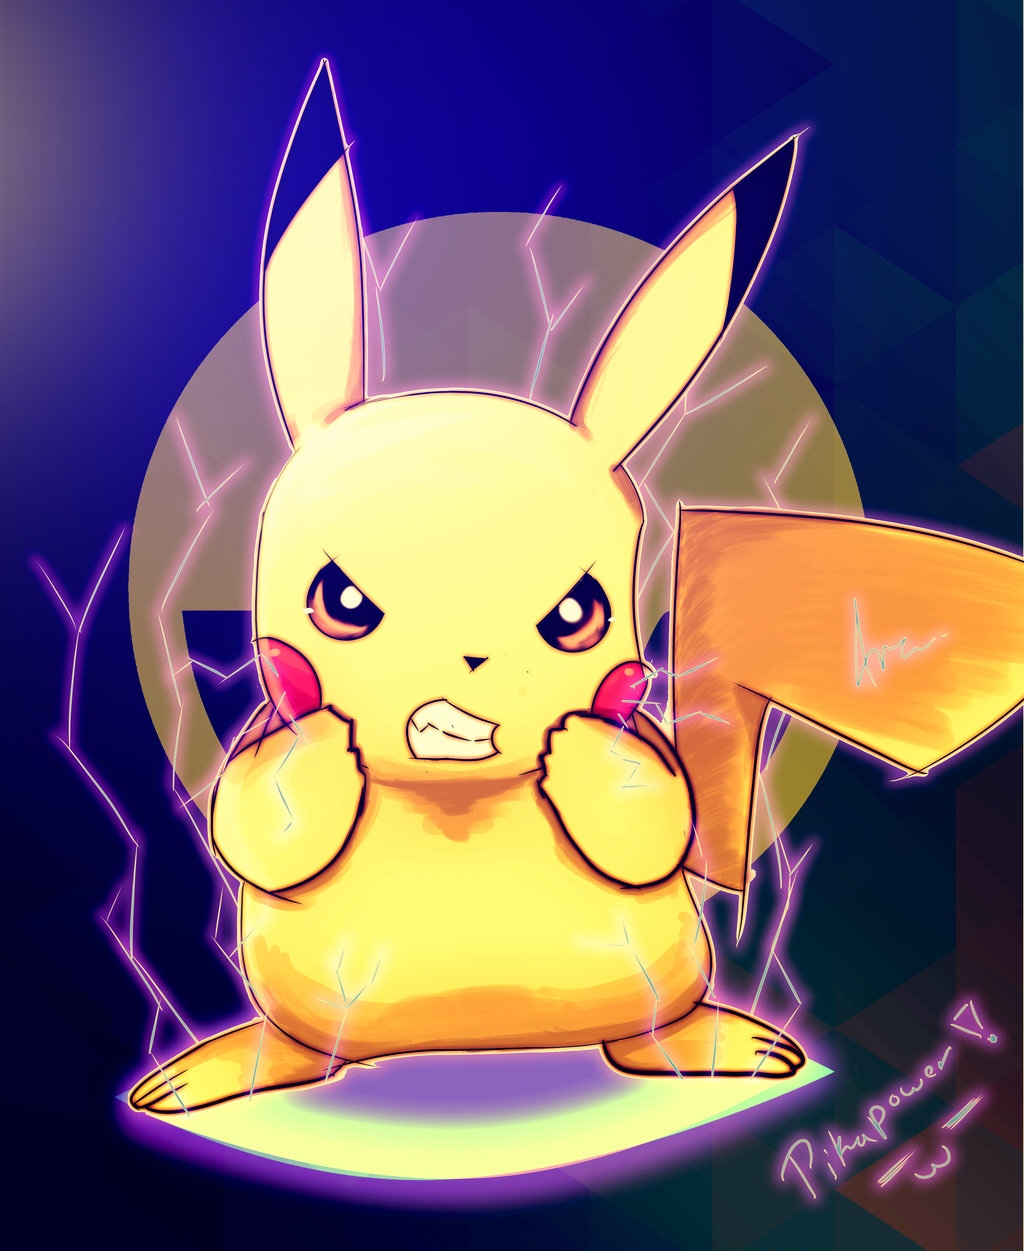 Pokemon Pikachu - Angry